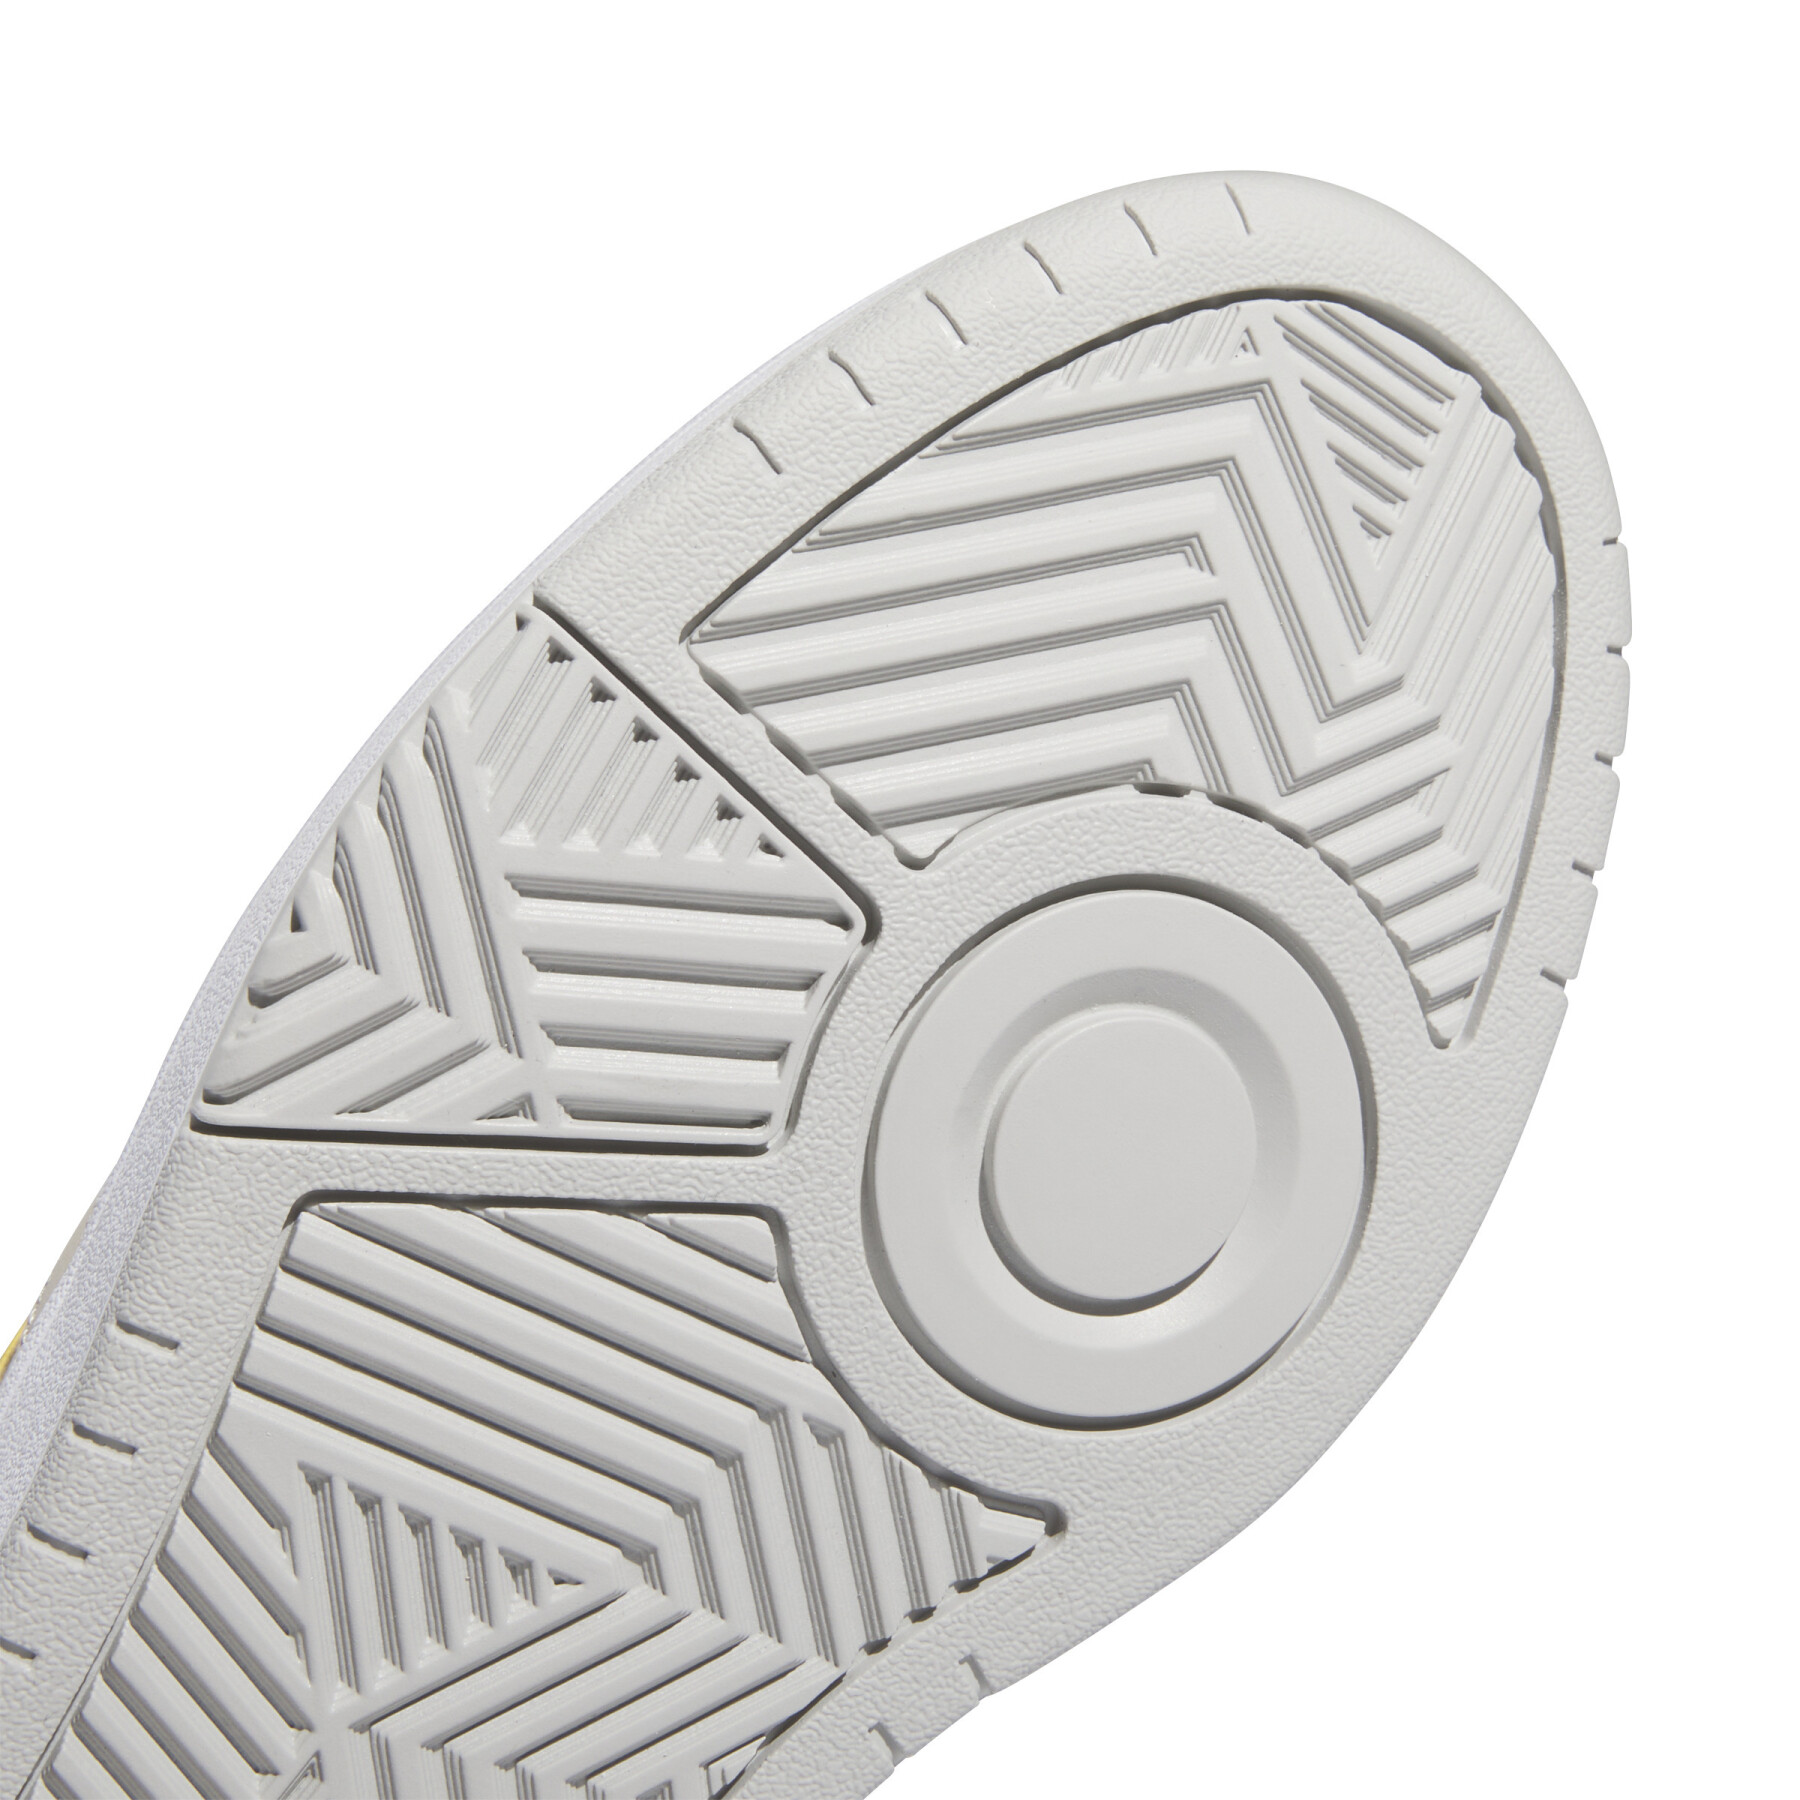 Scarpe da ginnastica adidas Hoops 3.0